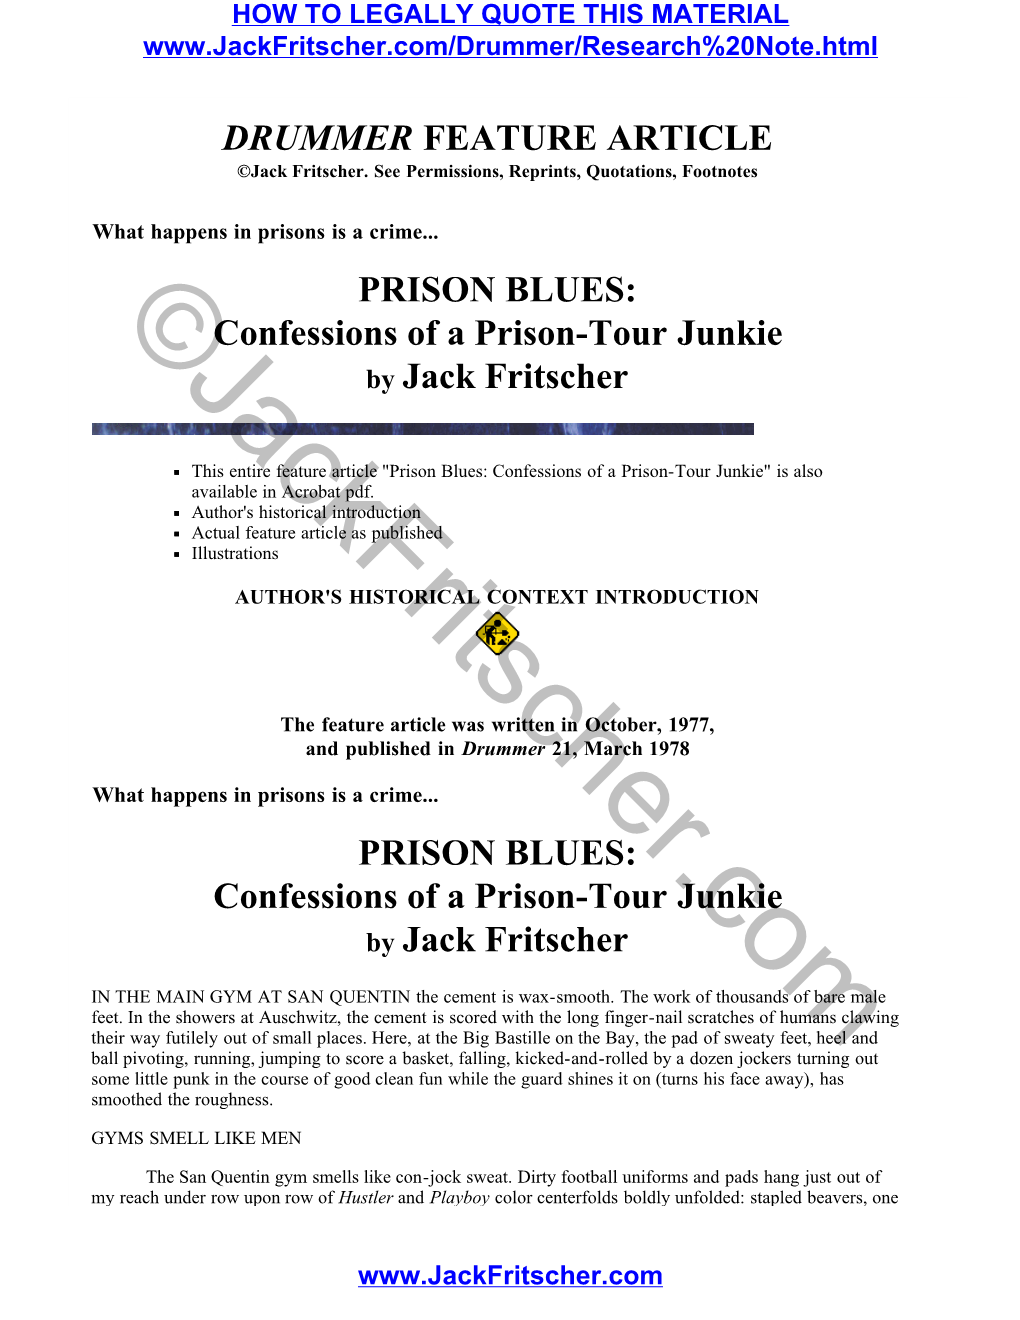 PRISON BLUES: ©Jackfritscher.Comconfessions of a Prison-Tour Junkie by Jack Fritscher